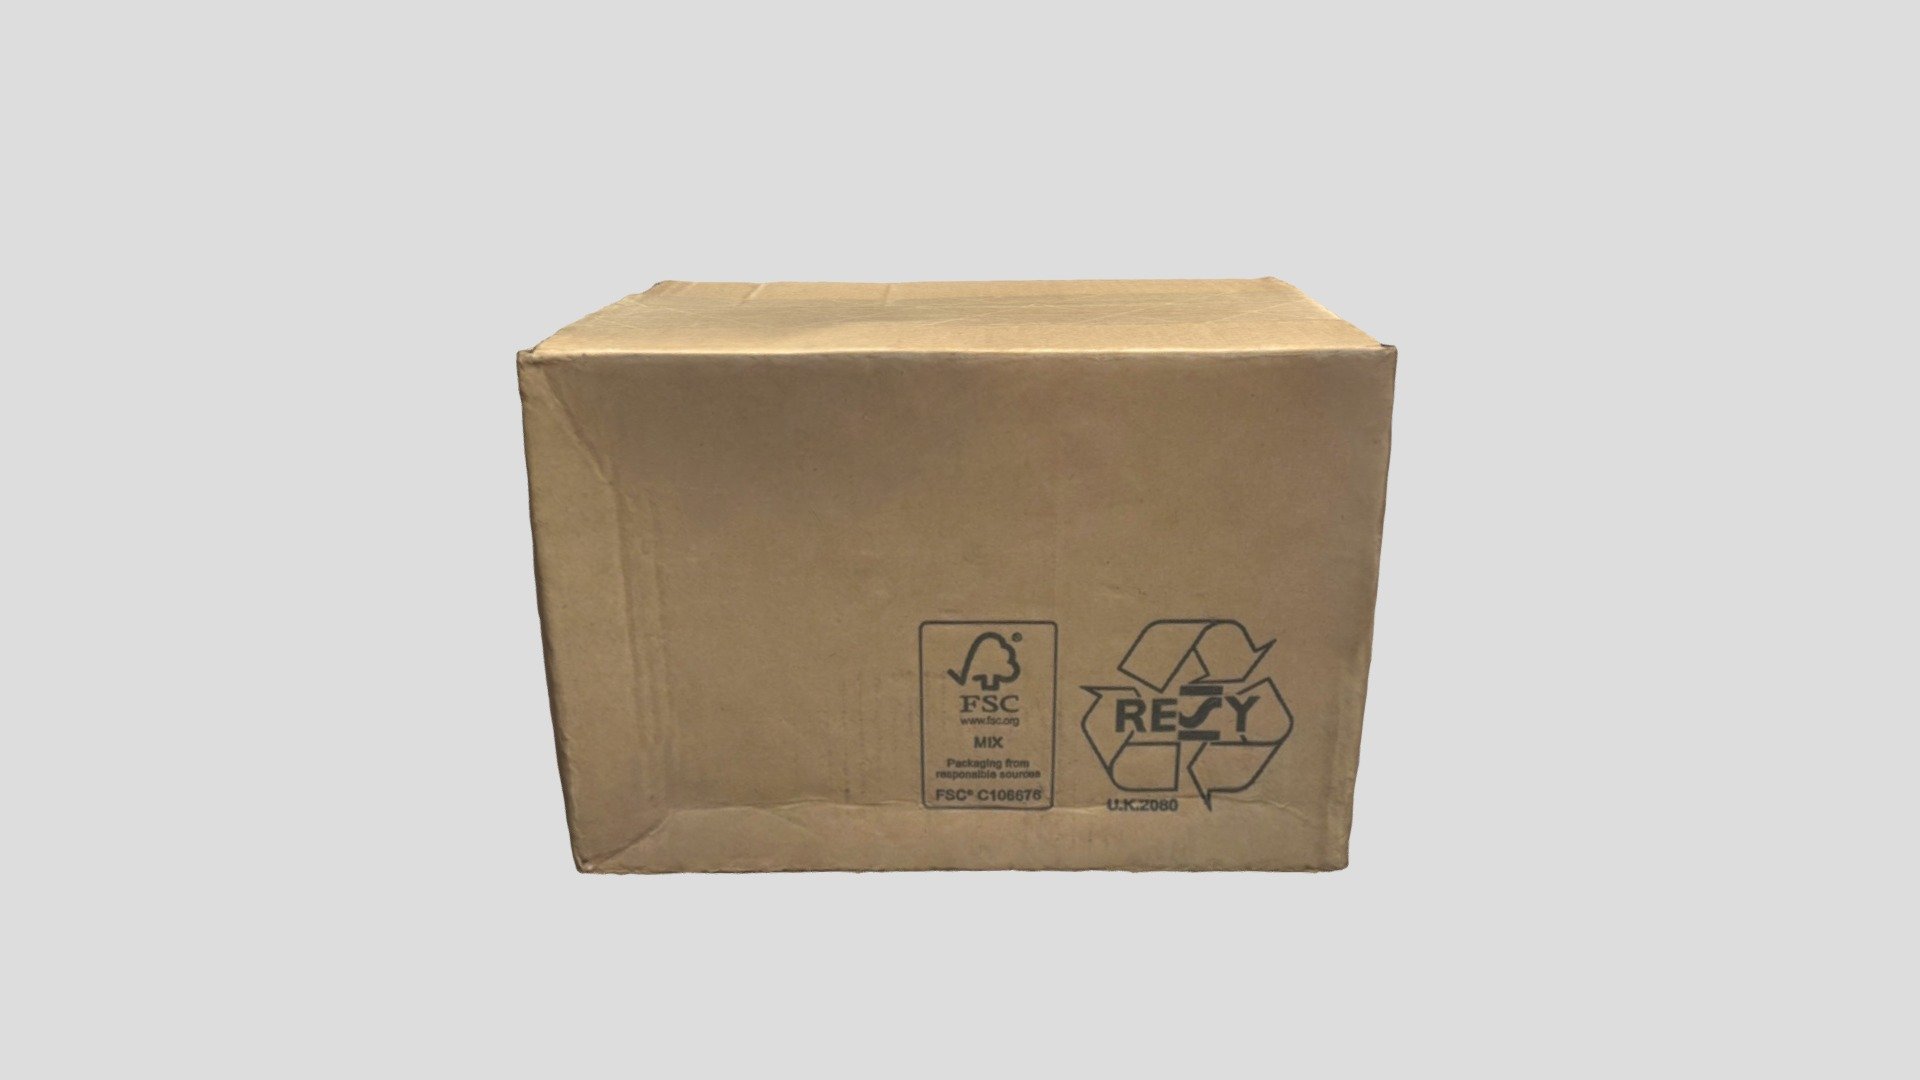 -Cardboard box captured using LiDar-

For other formats please comment 3d model